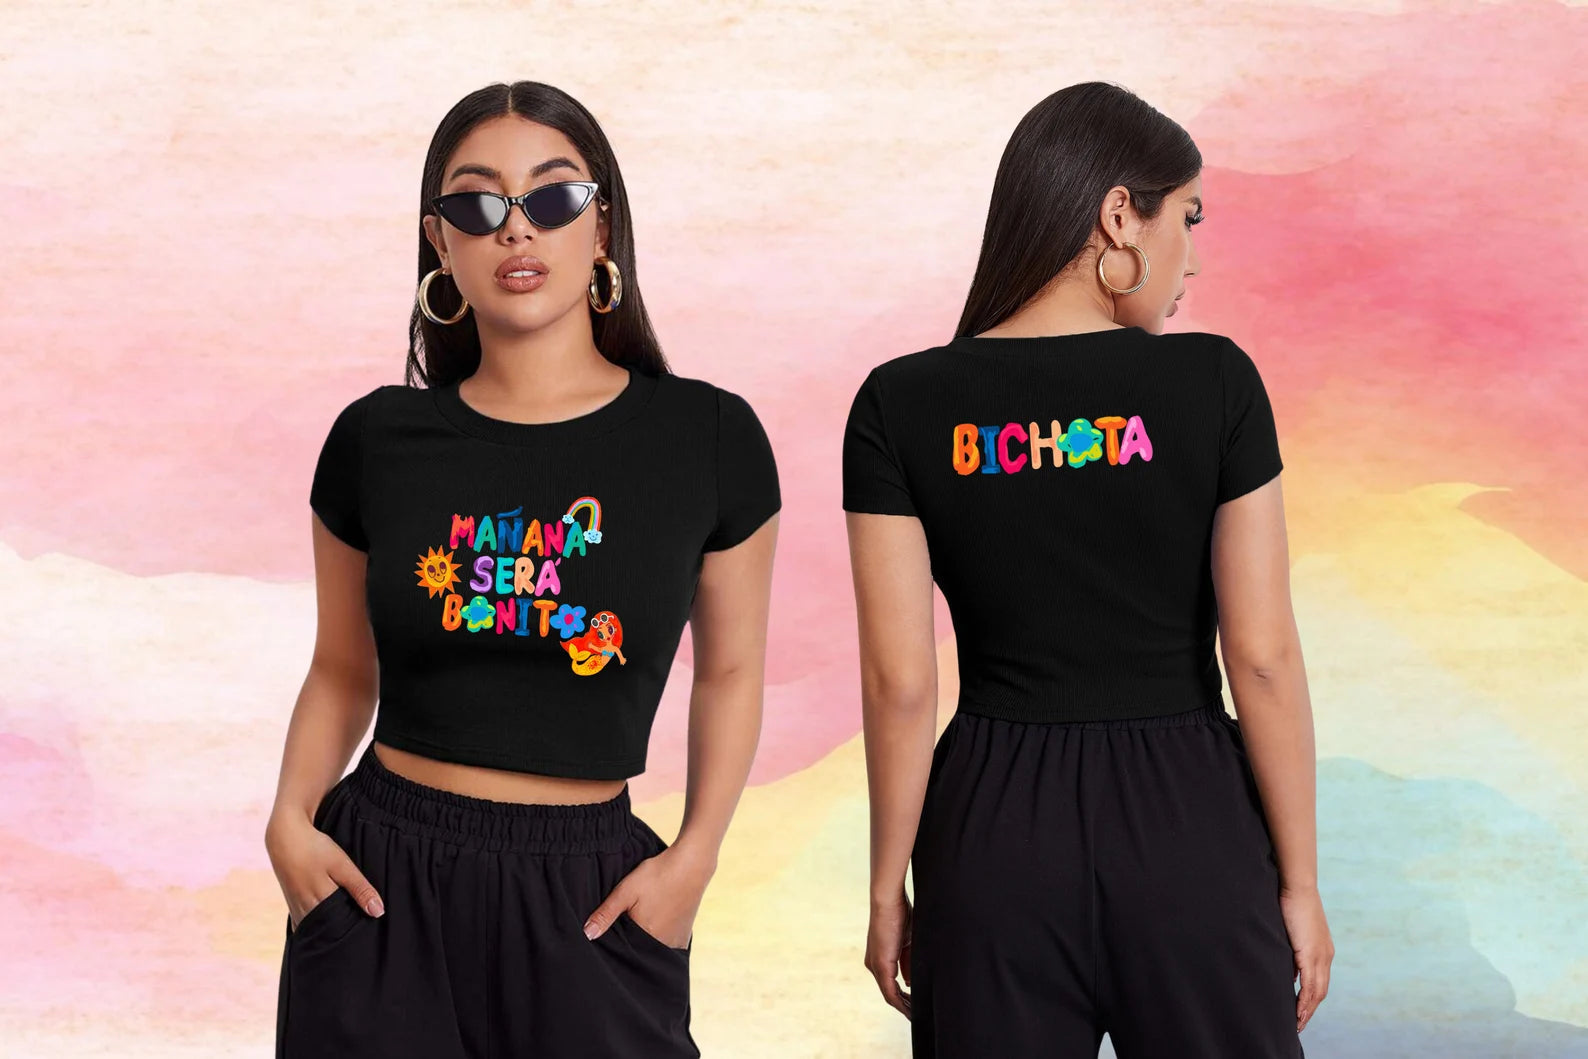 Camiseta de Karol g Manana Sera Bonito para mujer, top gráfico